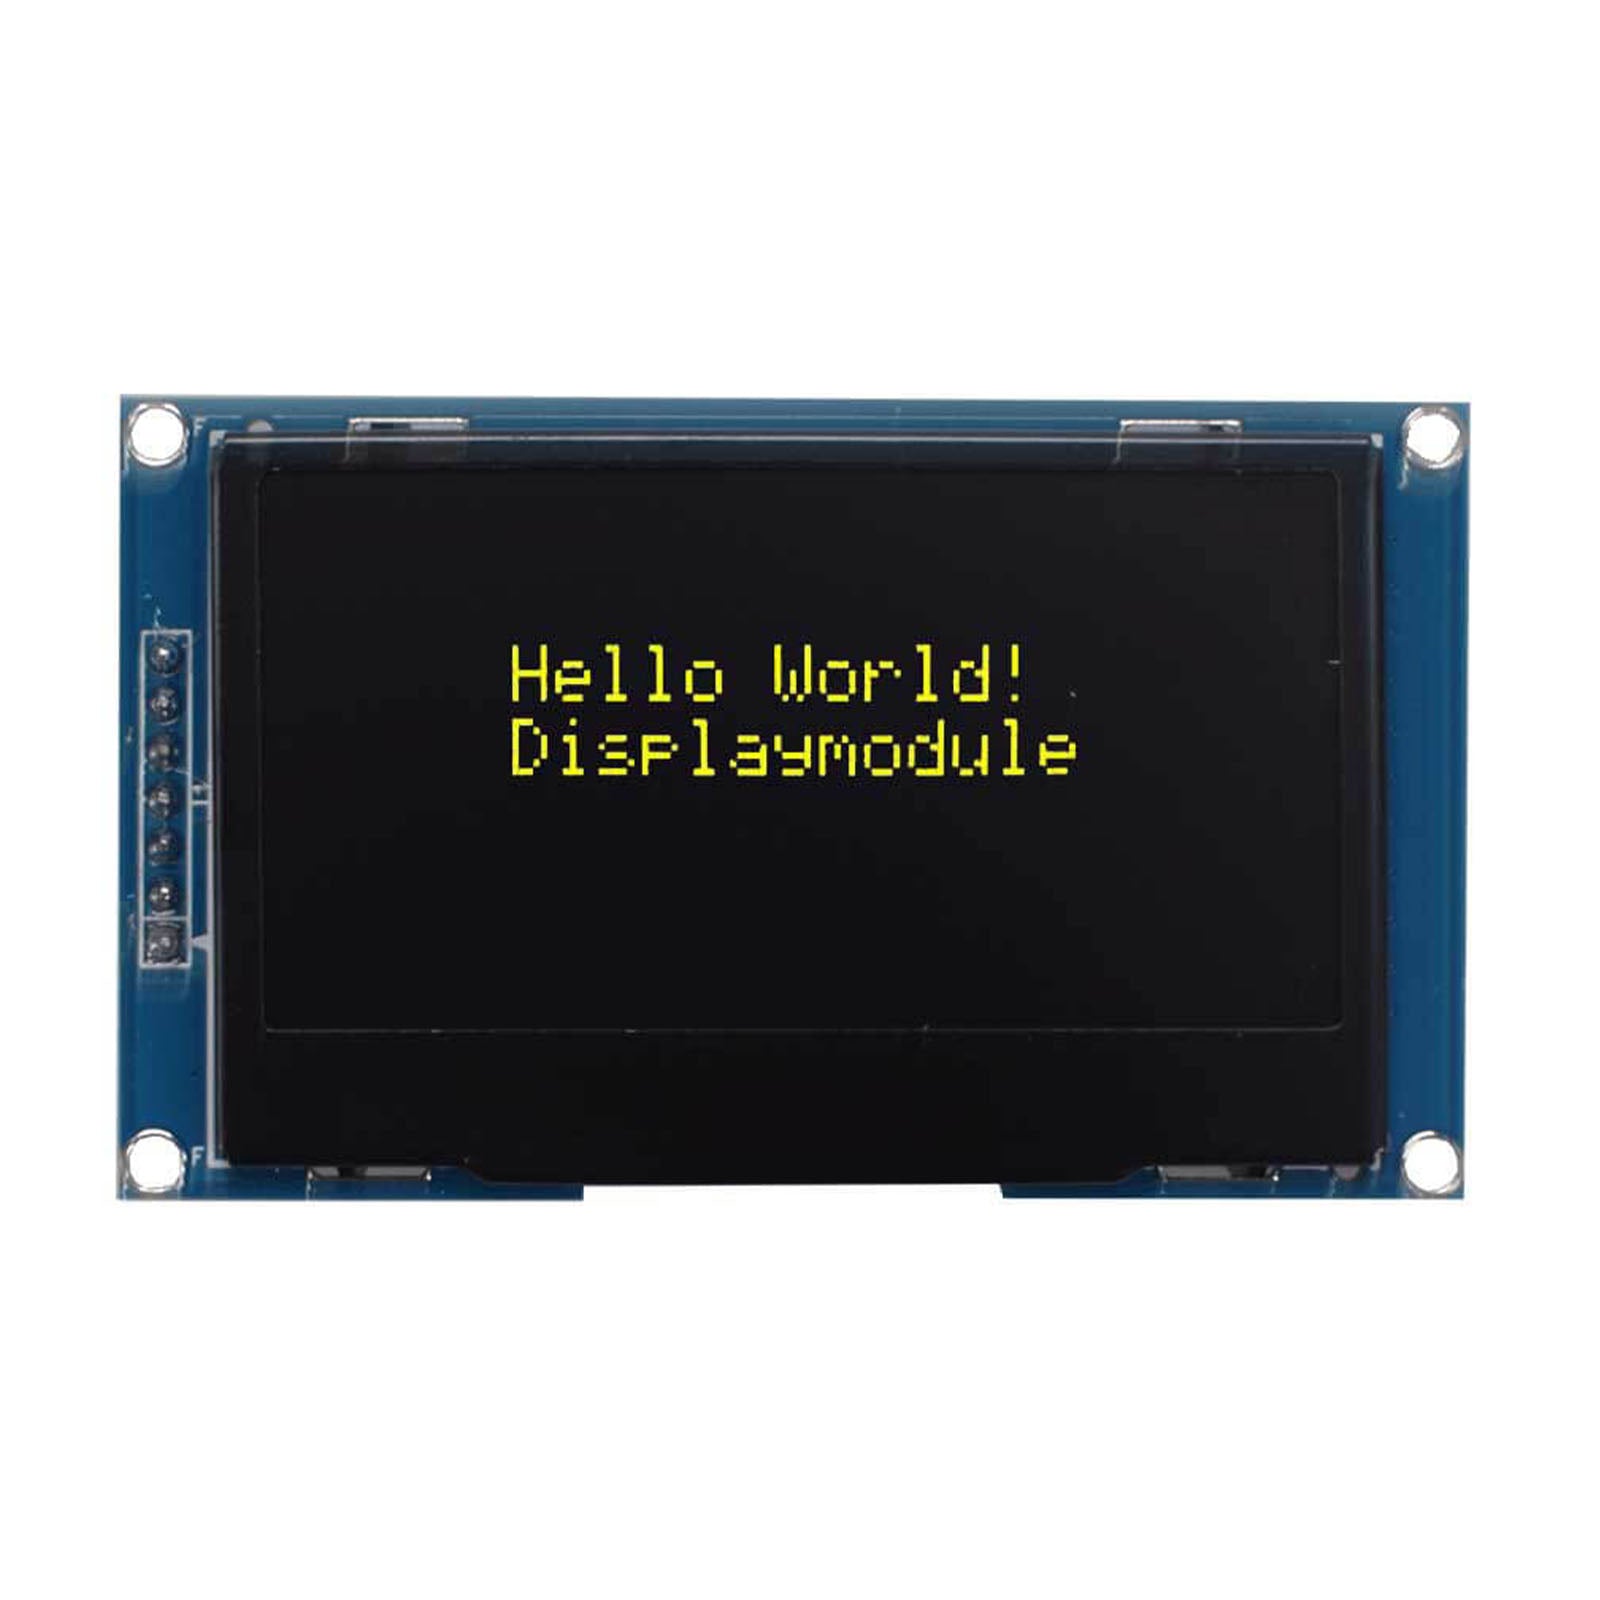 2.4-inch OLED display screen showing the yellow characters 'Hello World! DISPLAYMODULE'